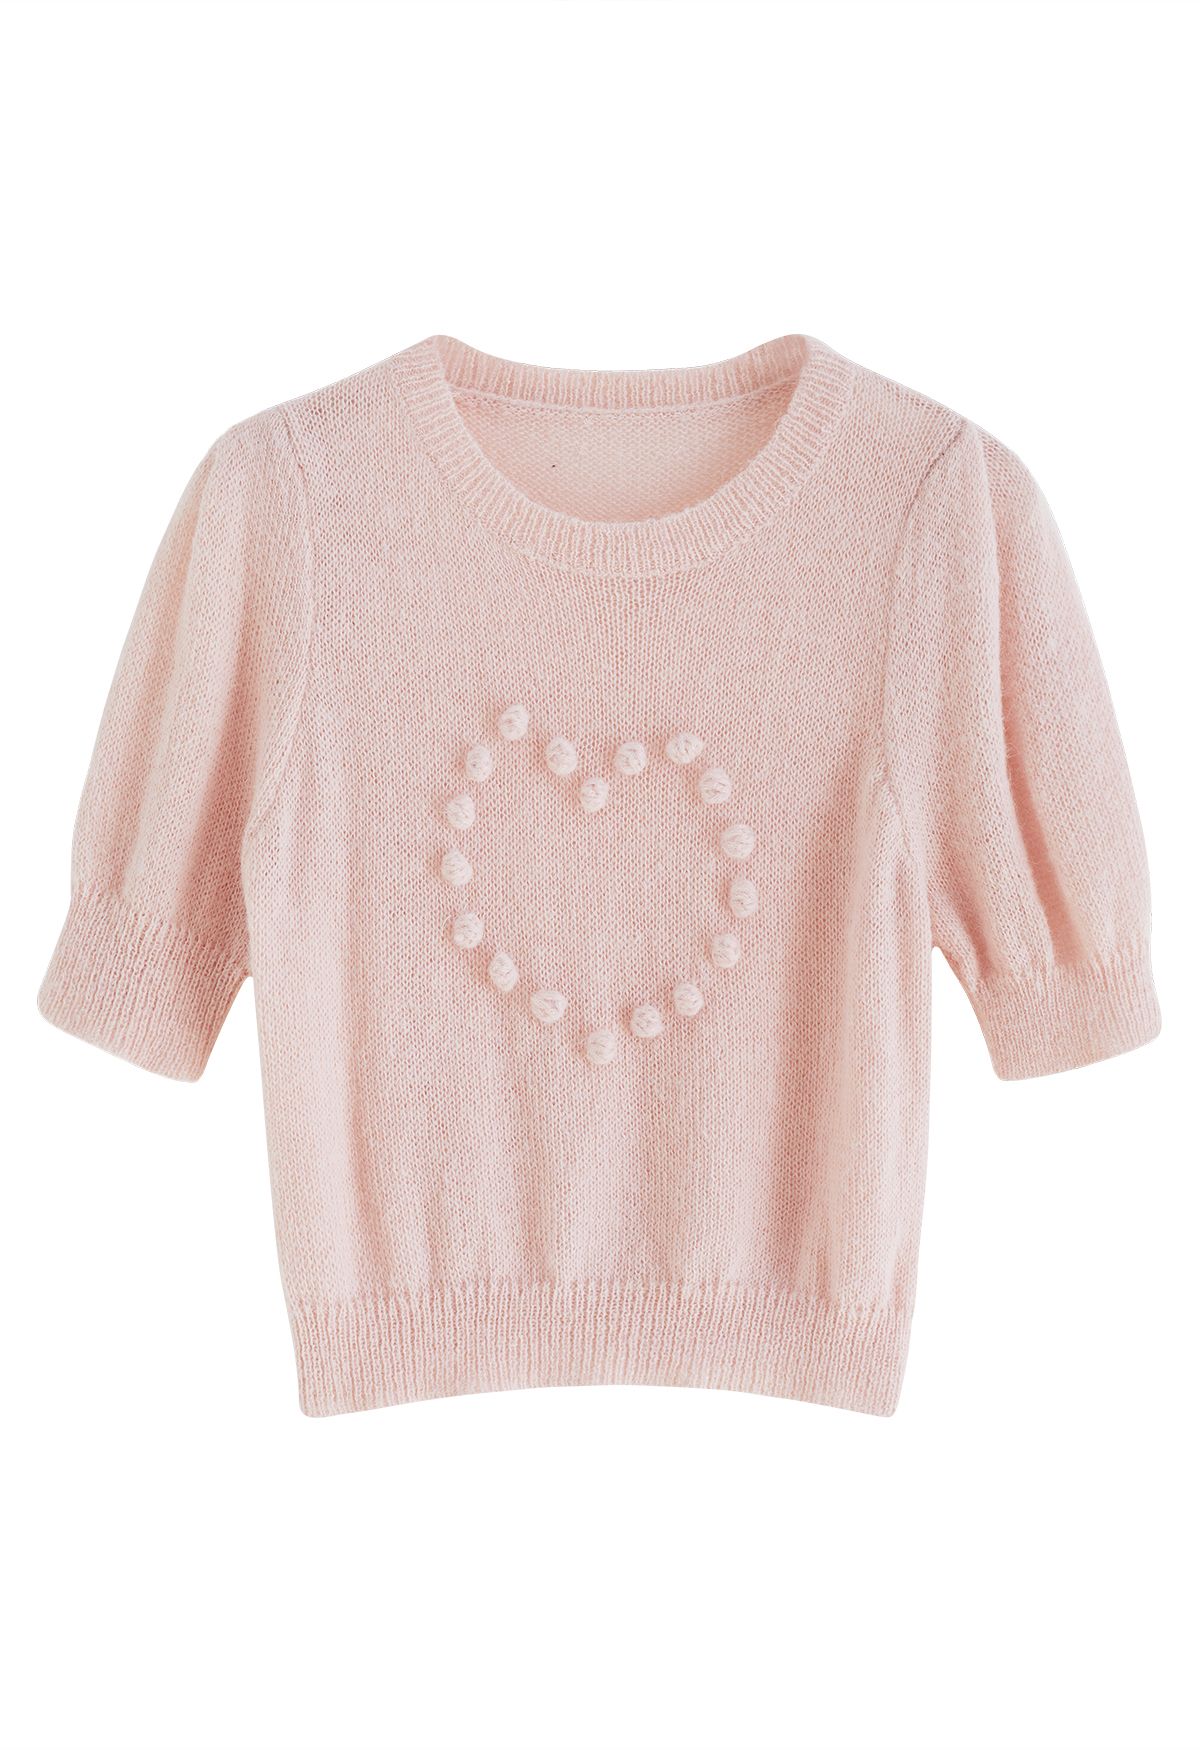 Pom-Pom Heart Short Sleeve Knit Top in Pink